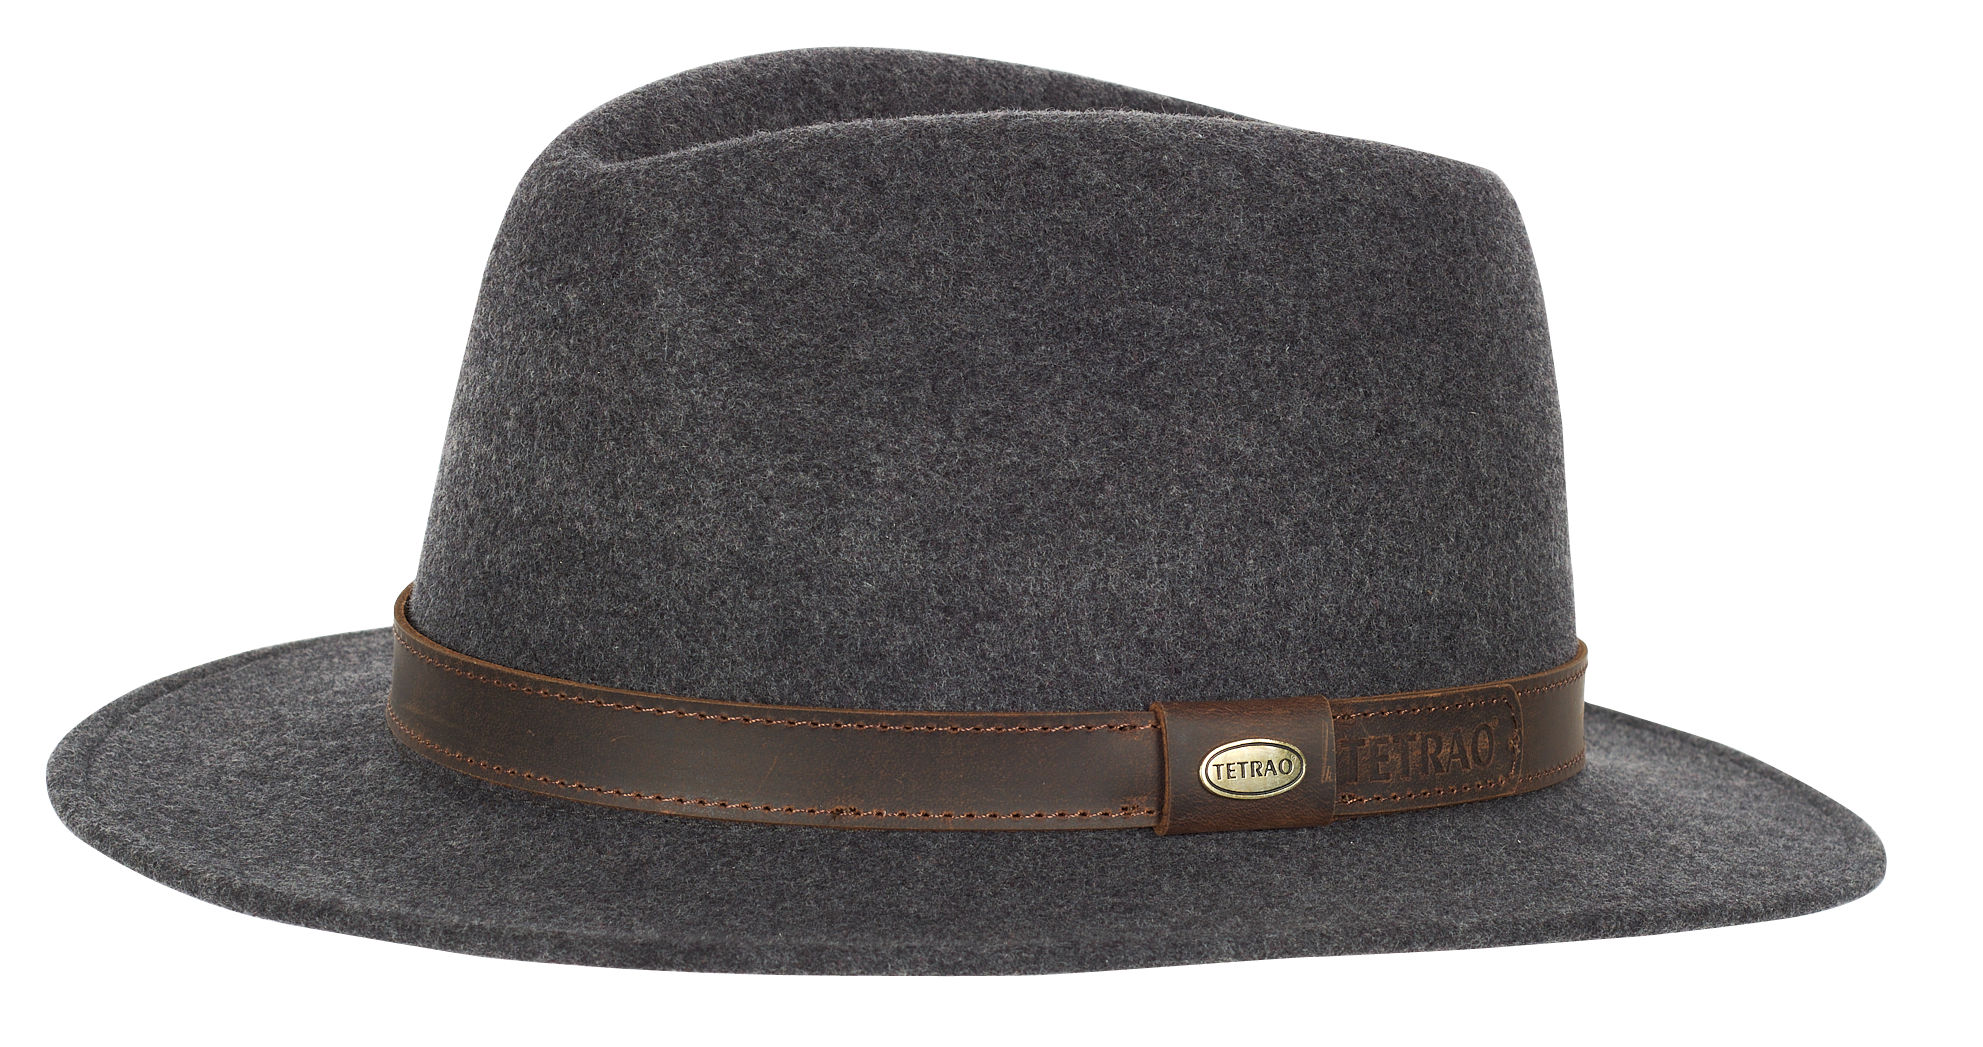 Poľovnícky klobúk TETRAO melanž UNI - šedý  60